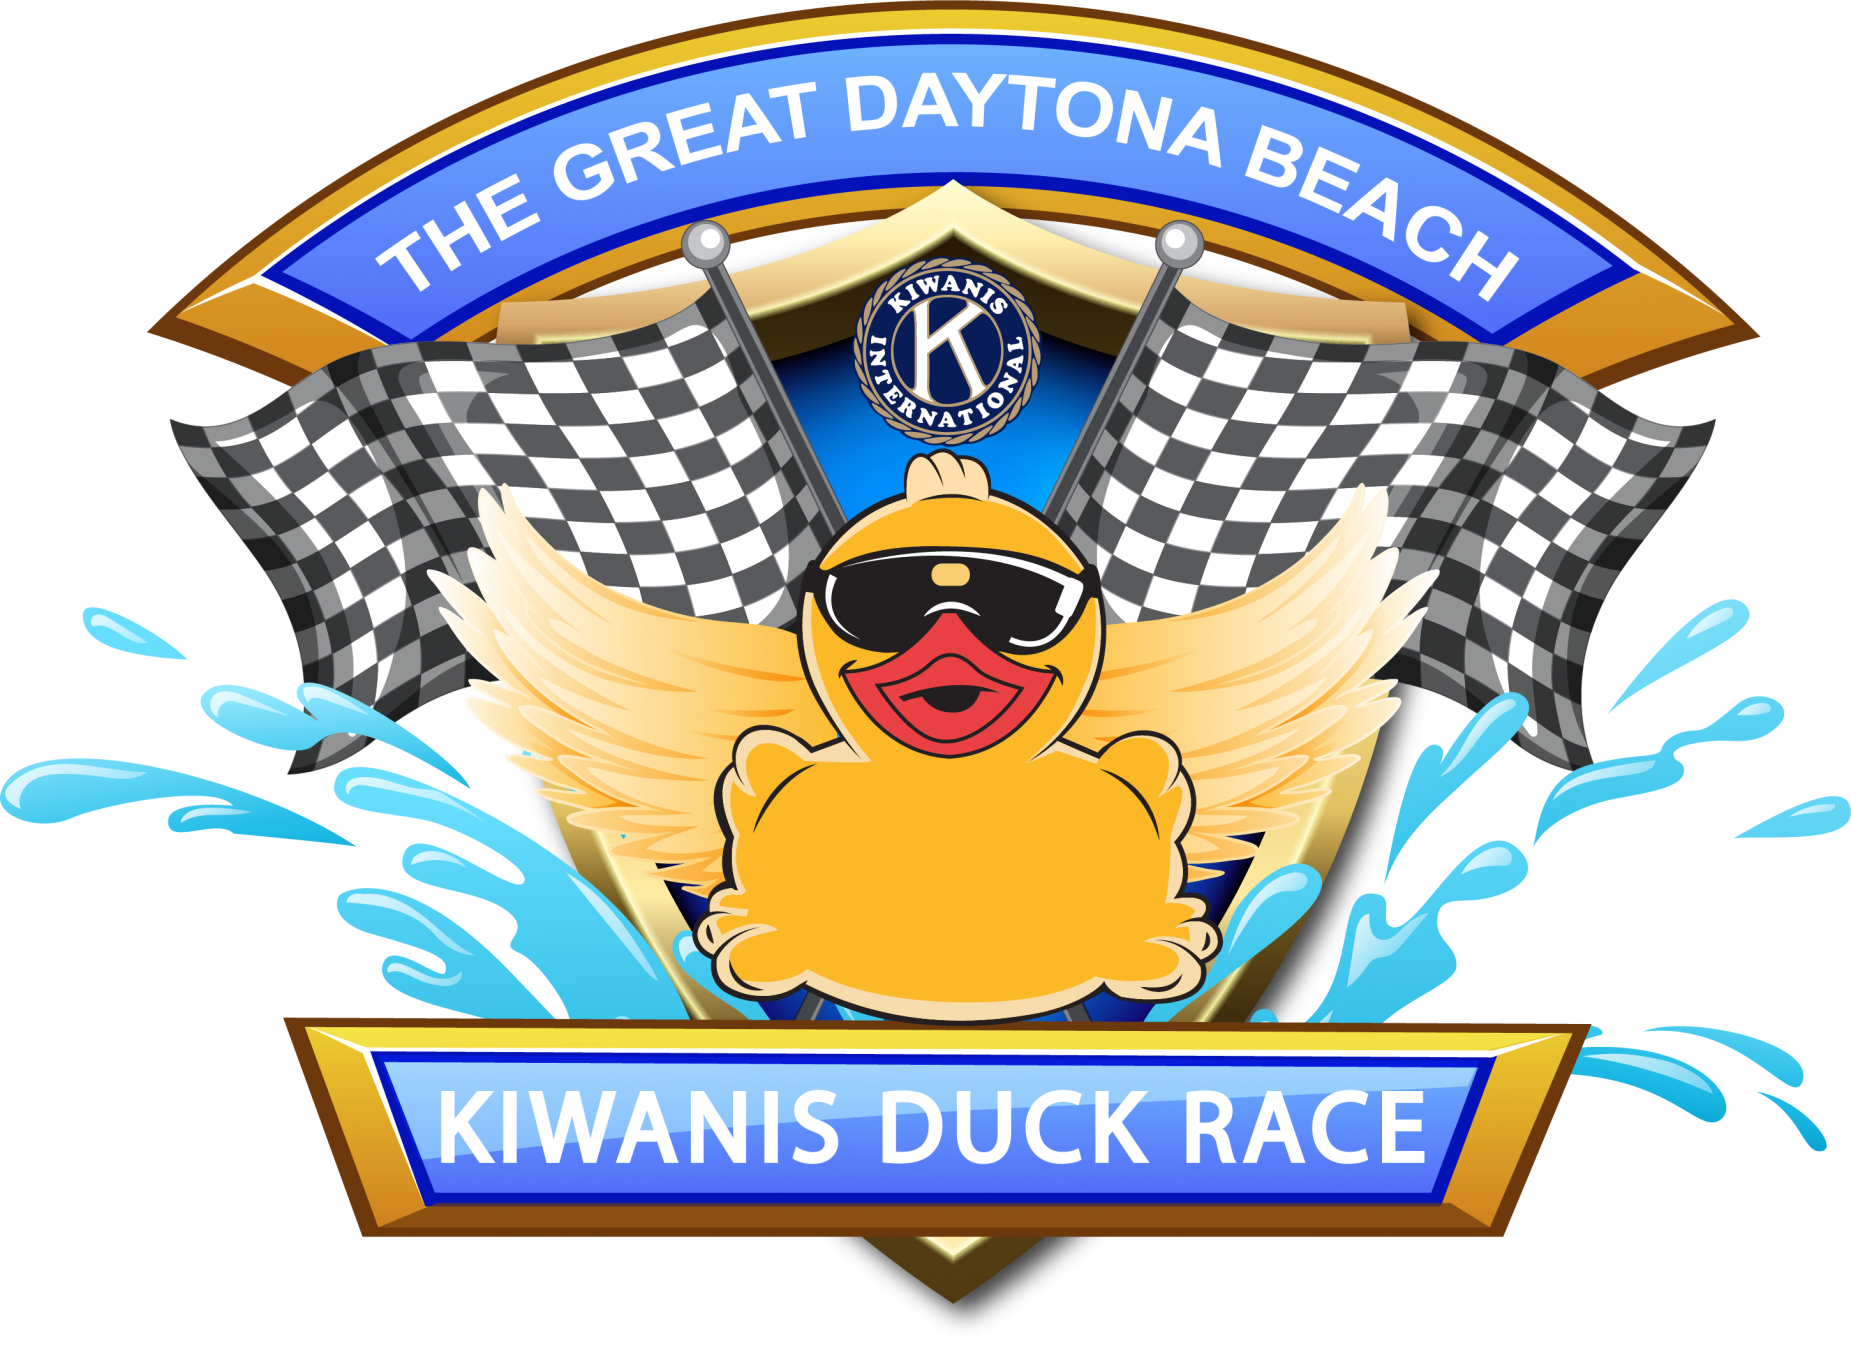 The Great Daytona Beach Kiwanis Duck Race